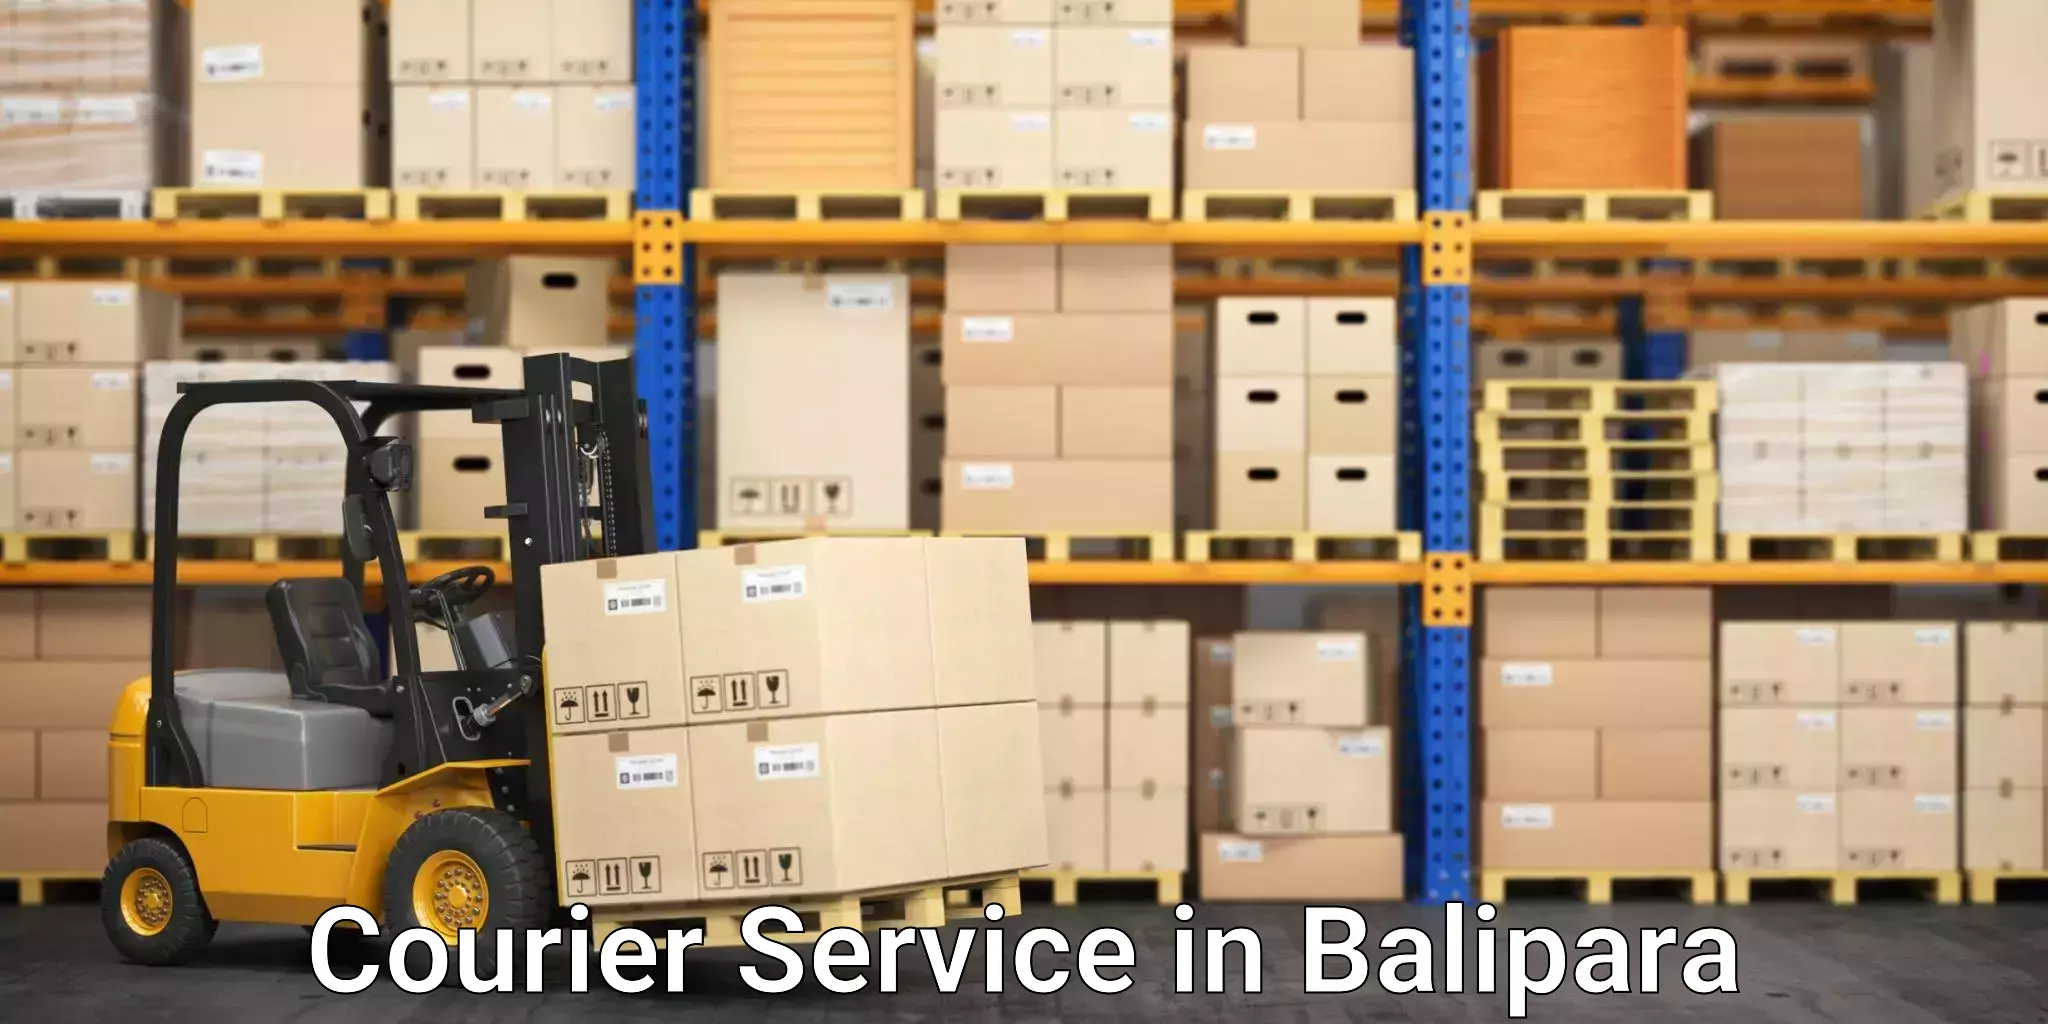 Affordable international shipping in Balipara